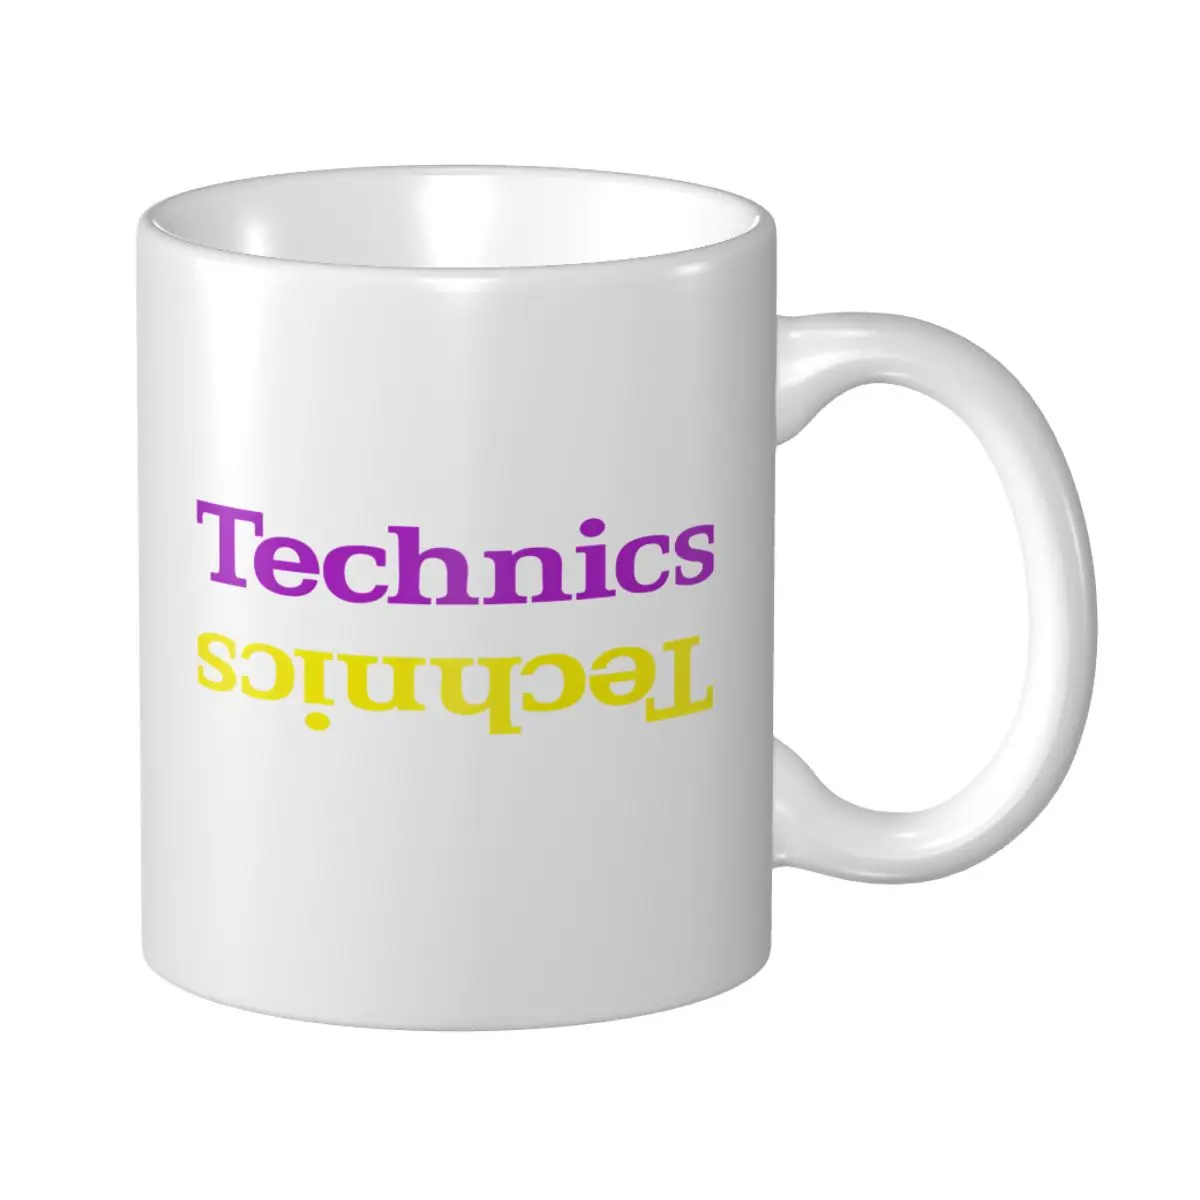 

Technics Coffe Mug Solid color Mugs Personality Ceramic Mugs Eco Friendly Tea Cup 330ml (11oz)